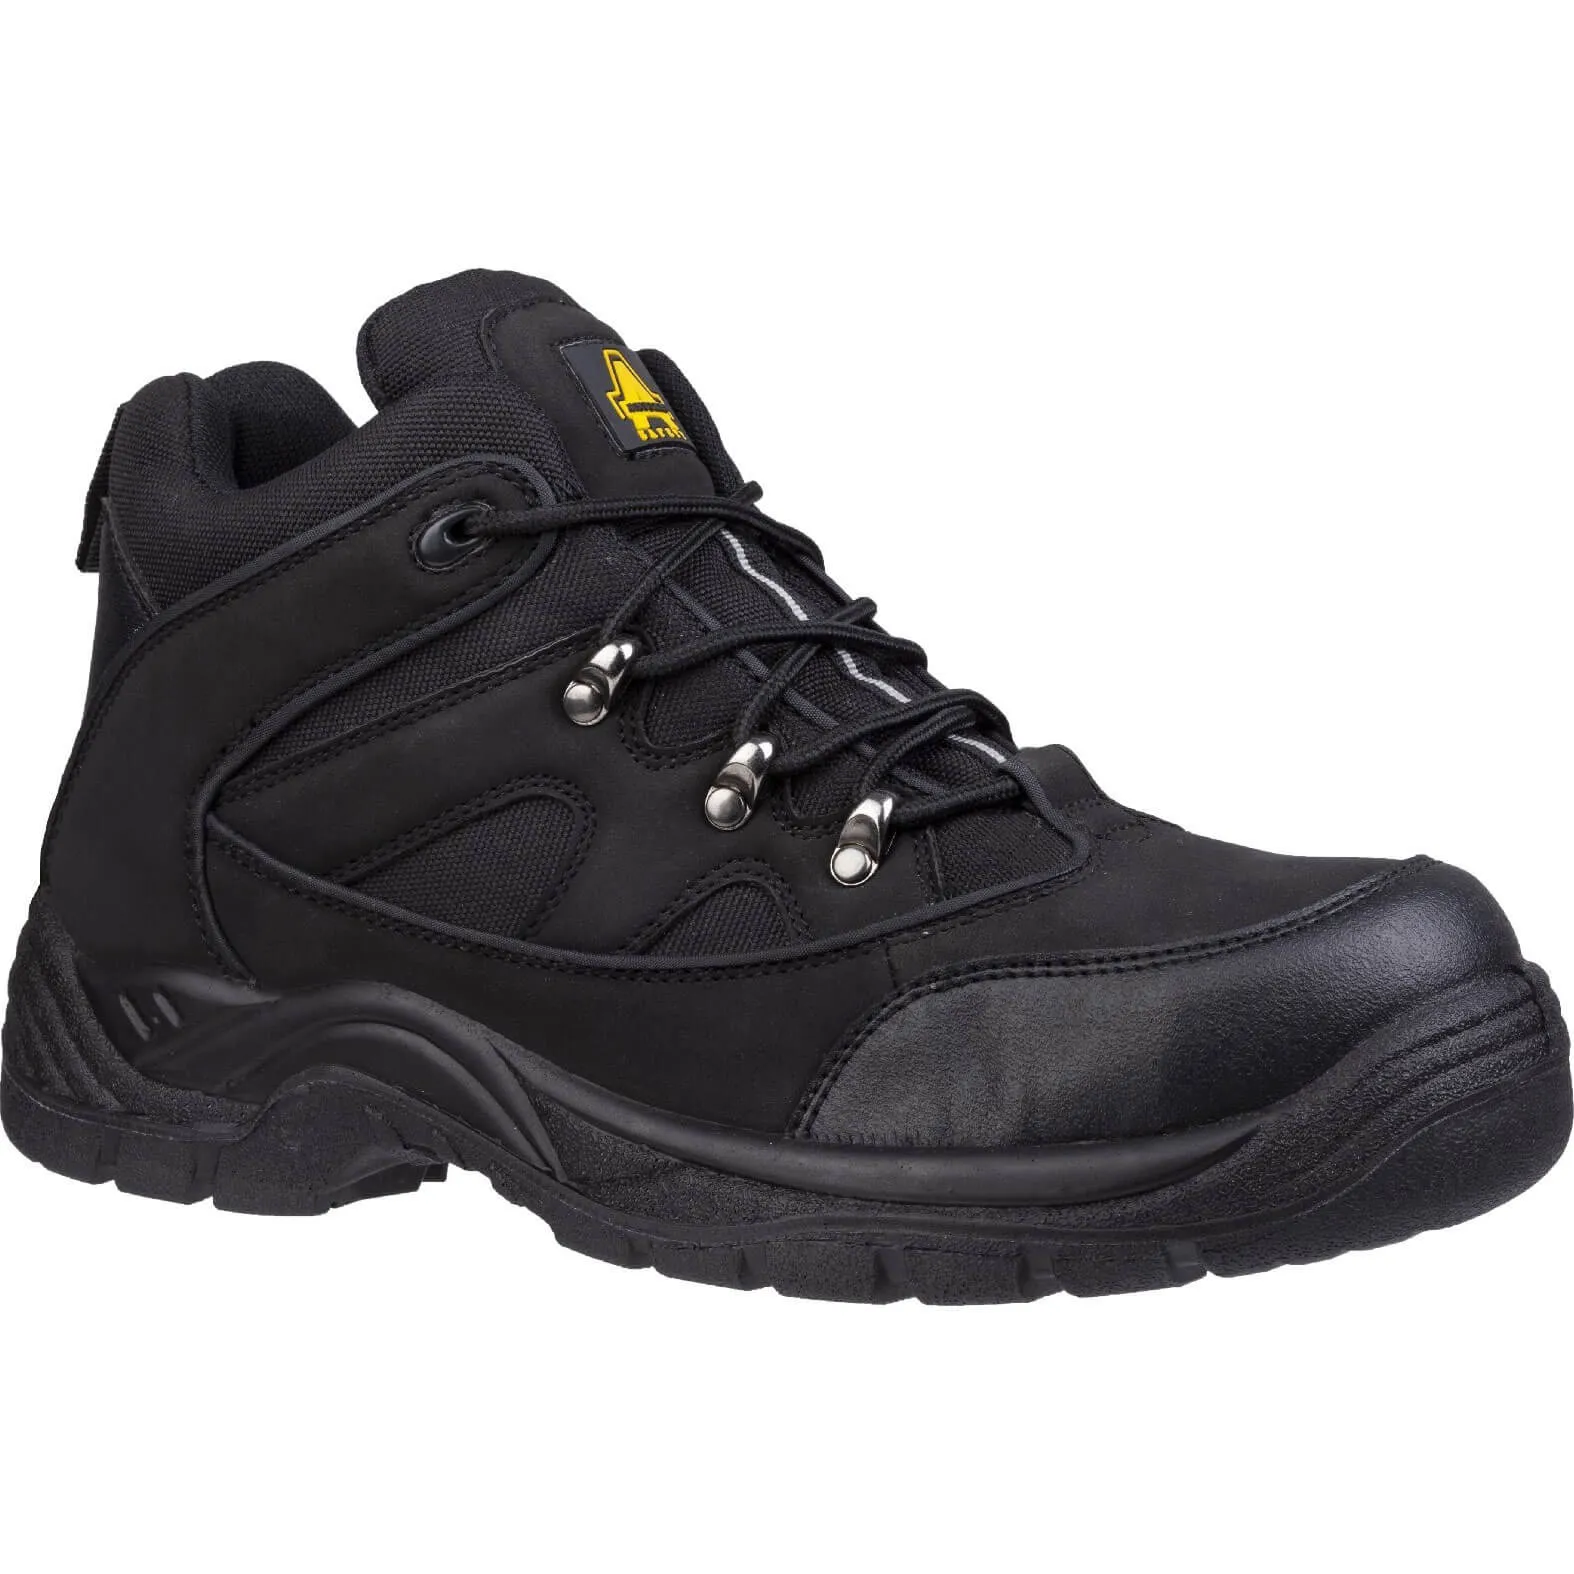 Amblers Mens Safety FS151 Vegan Friendly Safety Boots - Black, Size 8